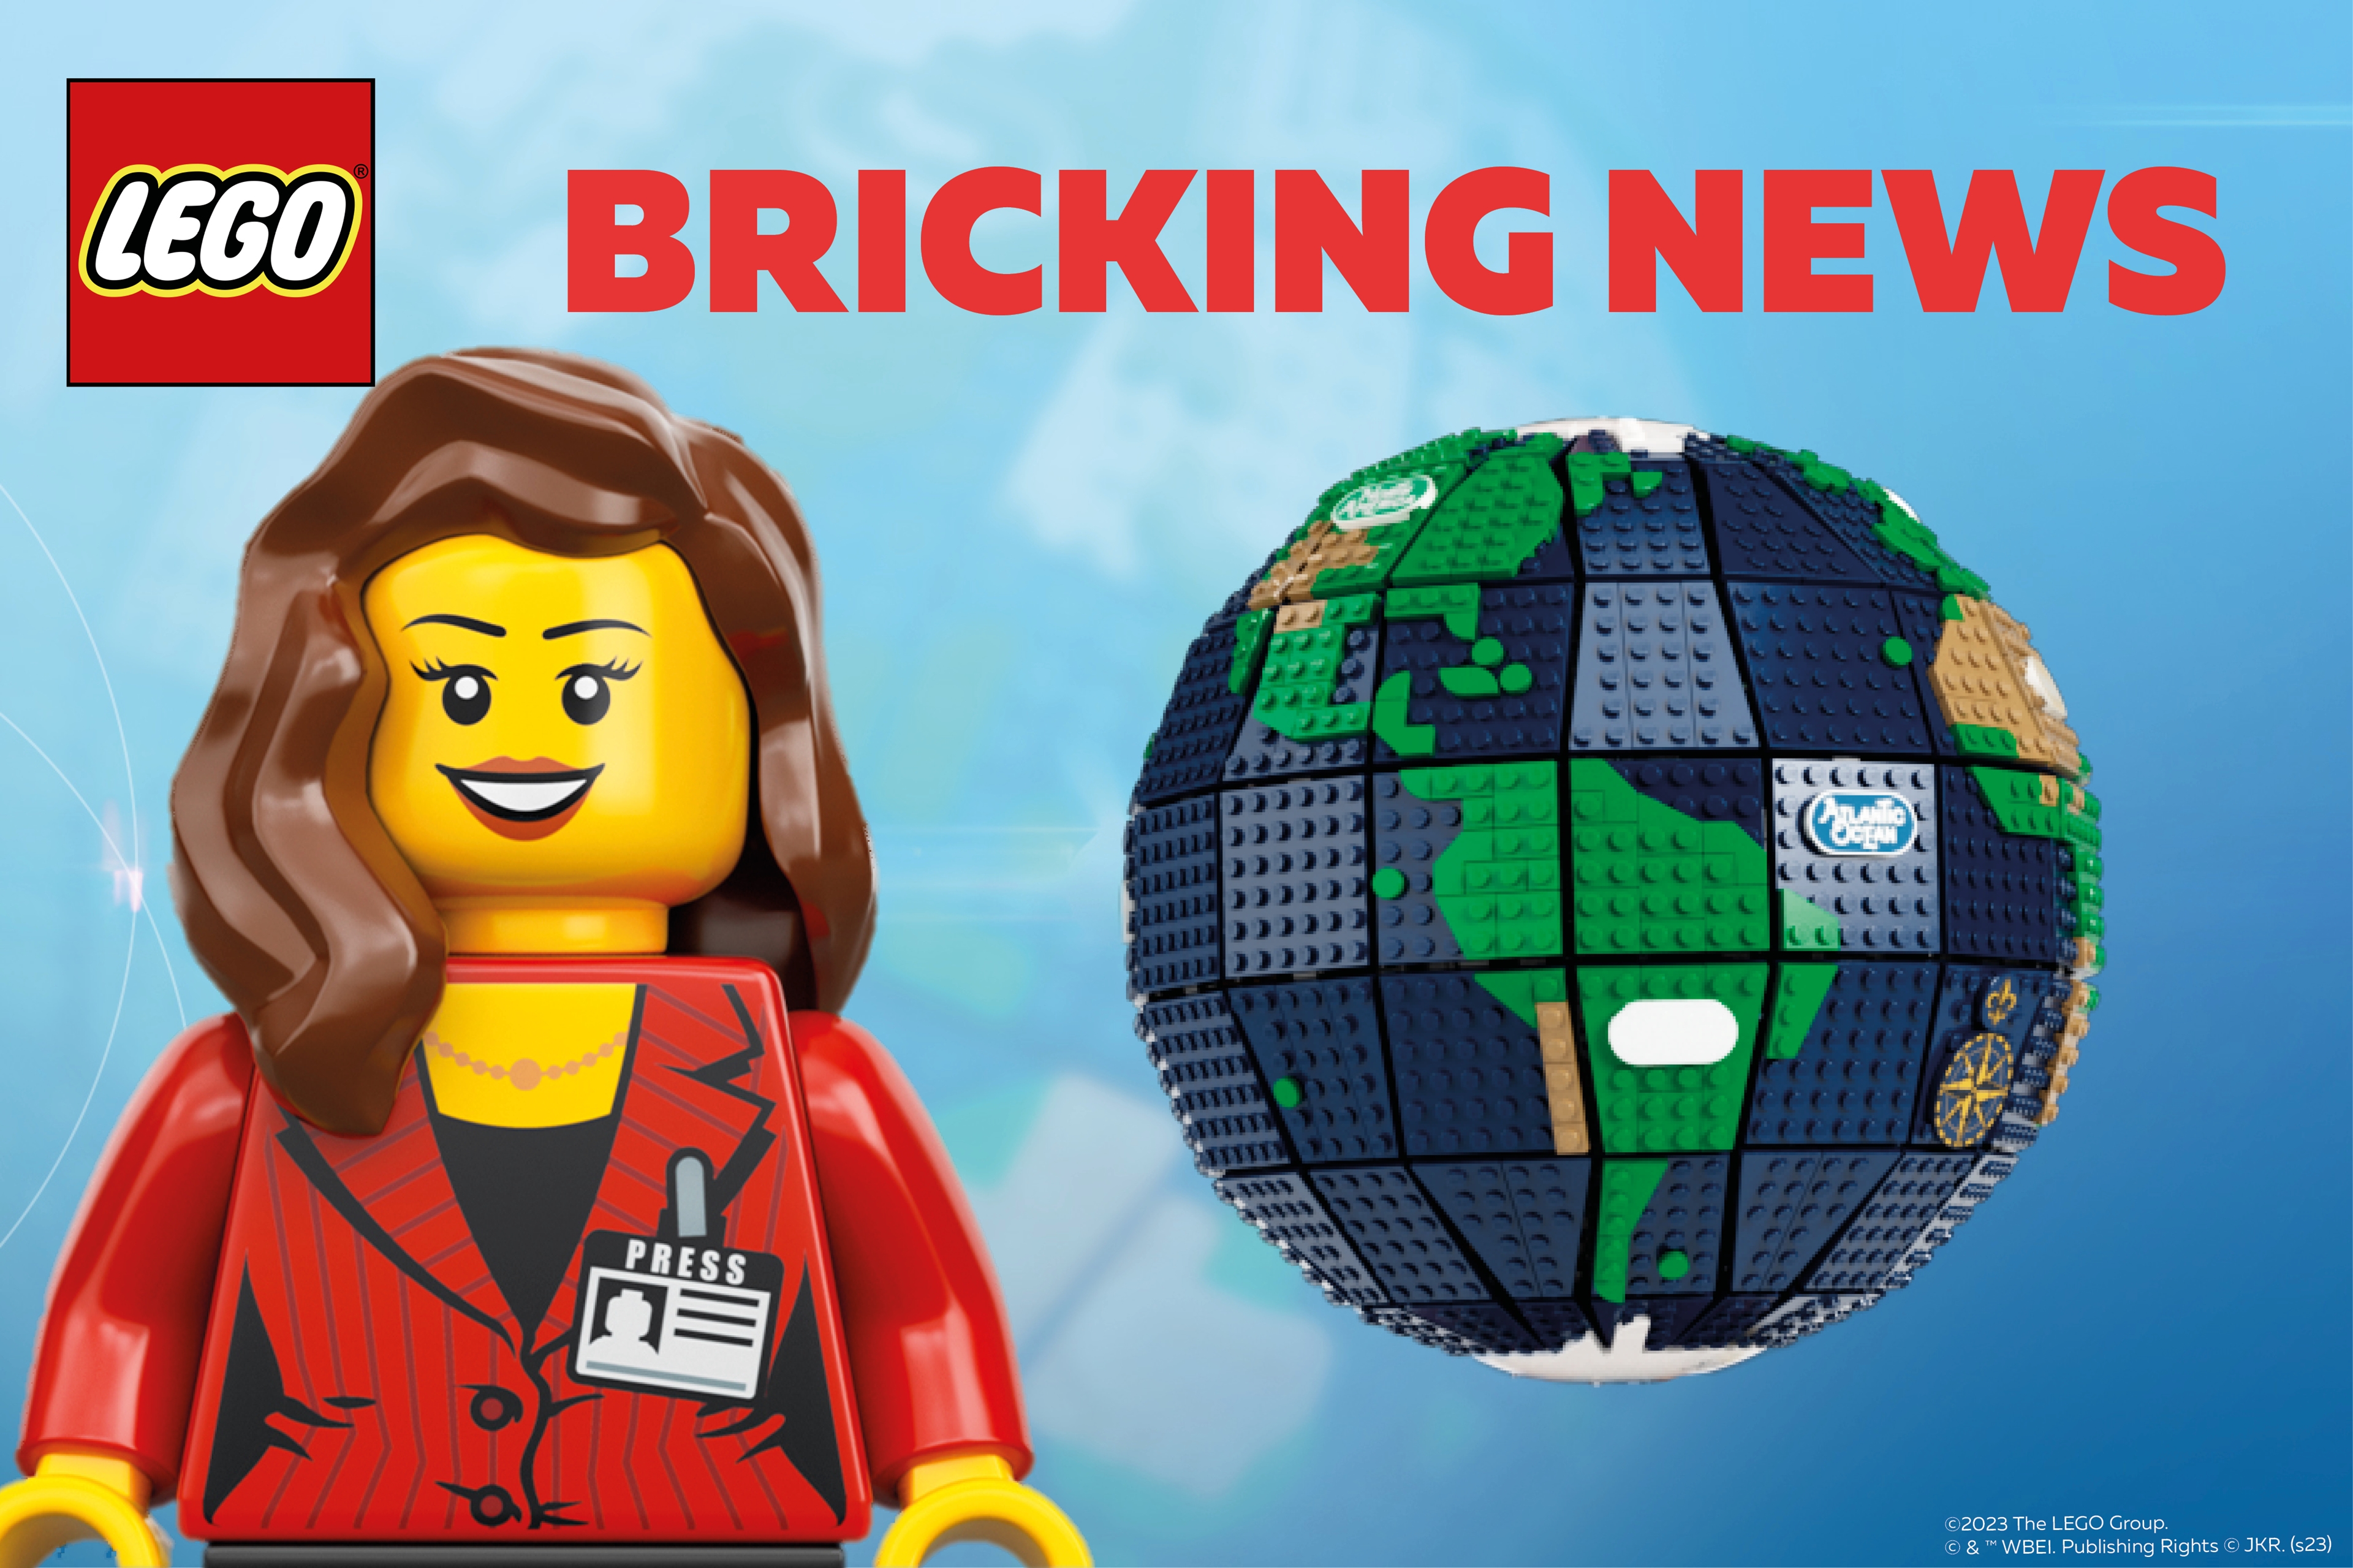 LEG_Web_Forside_LEGO Nyheder_Bricking News